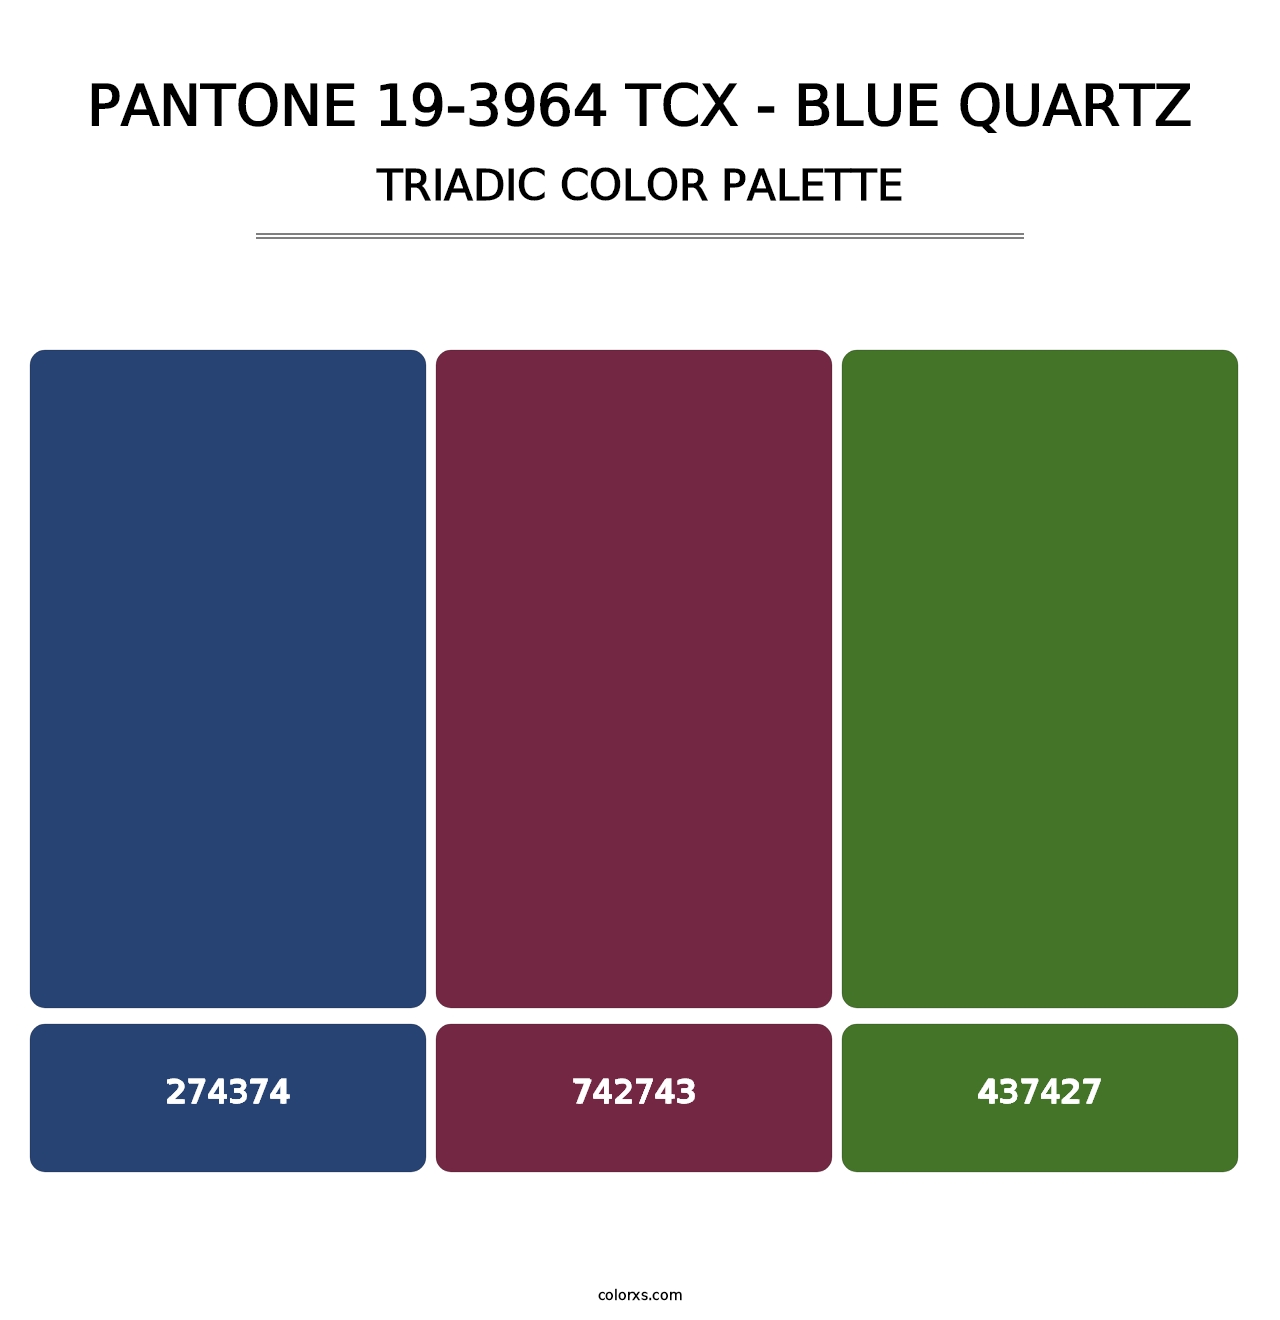 PANTONE 19-3964 TCX - Blue Quartz - Triadic Color Palette